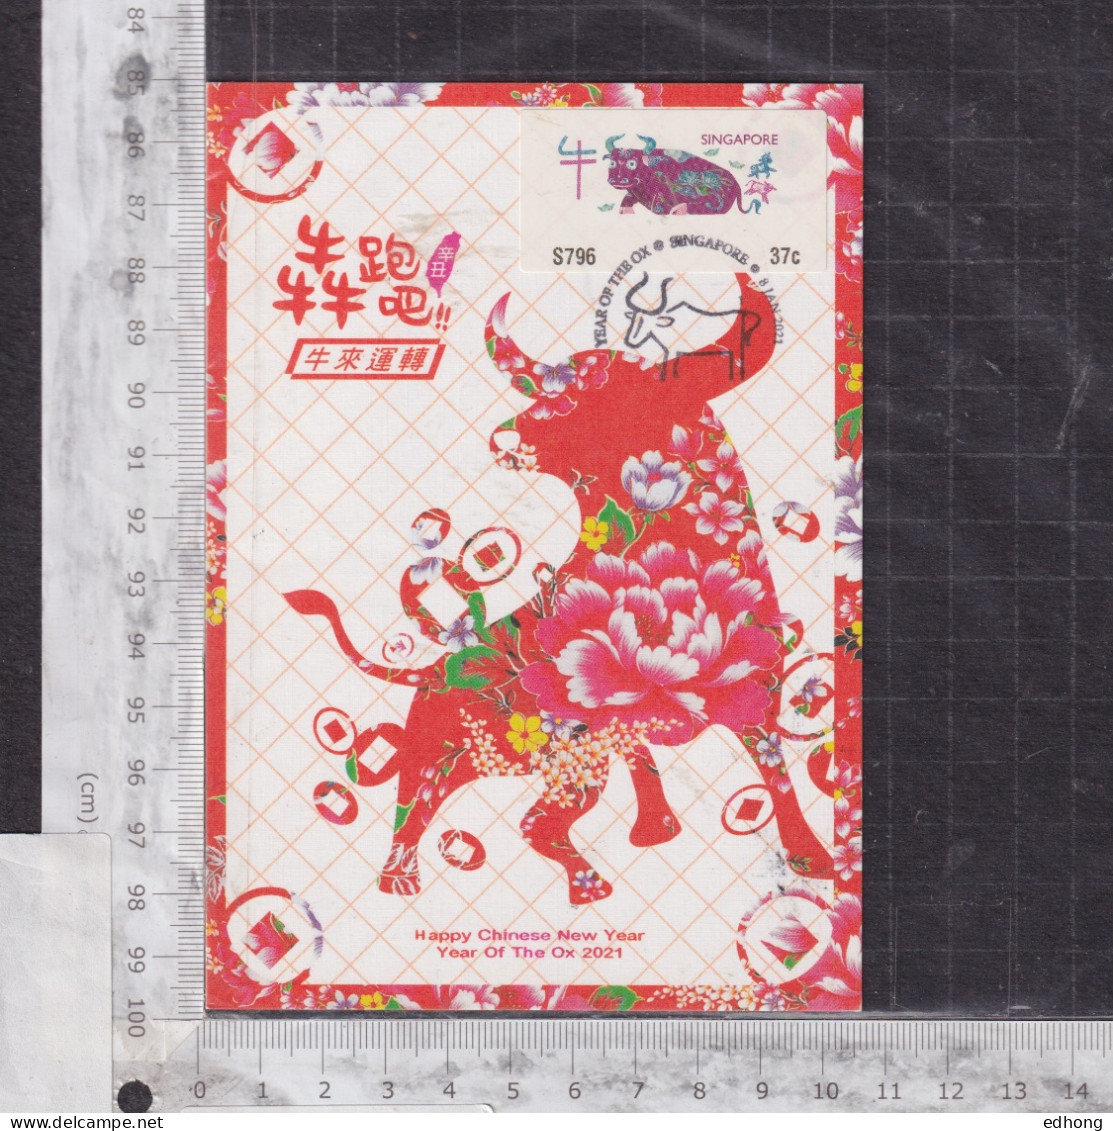 [Carte Maximum / Maximum Card / Maximumkarte] Singapore 2021 | Lunar New Year, Year Of The Ox Postage Label - Chinese New Year